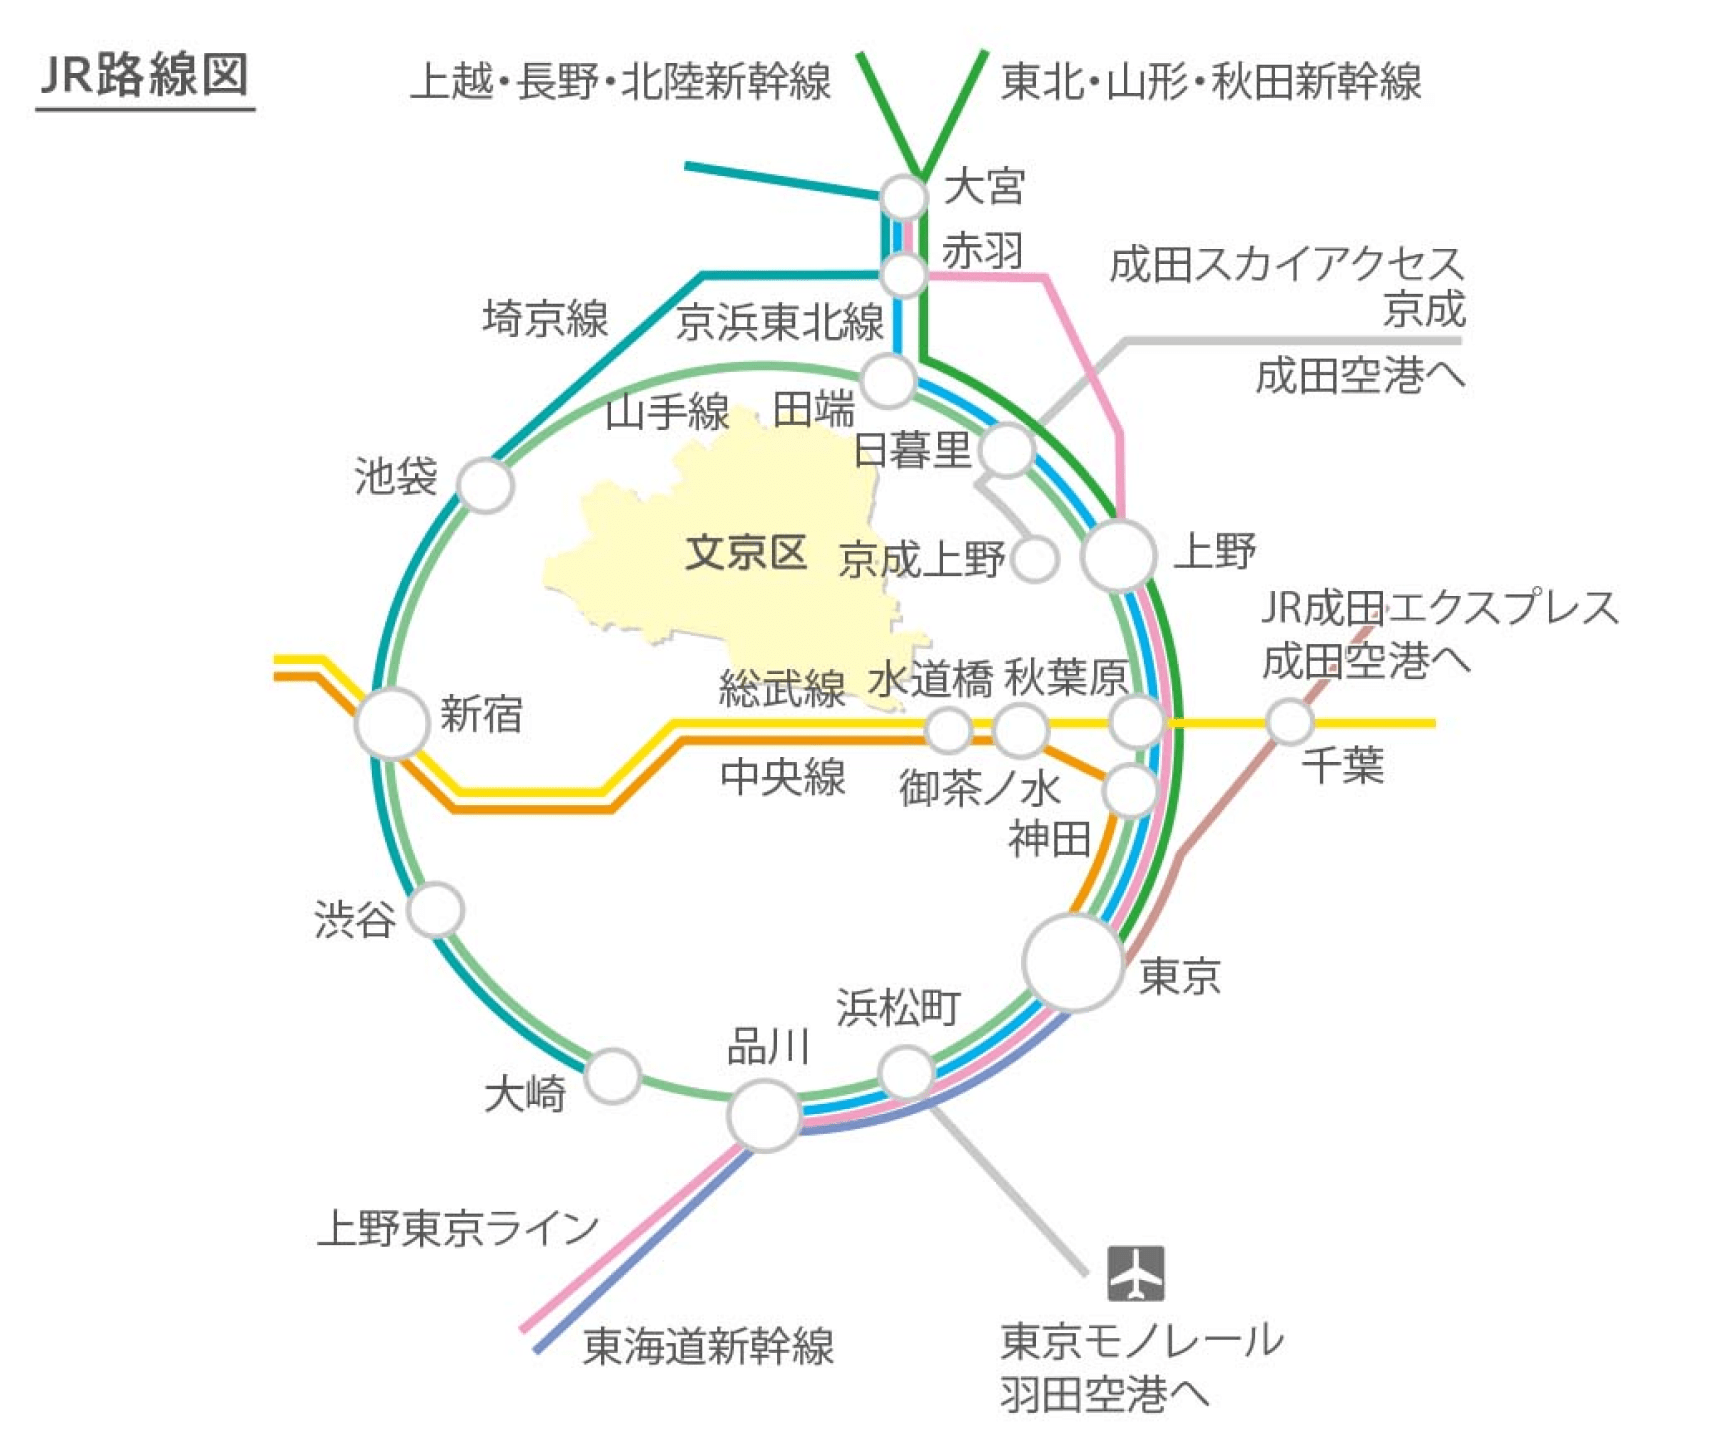 JR路線図：文京区を中心に、JRの路線や駅名が記載された図